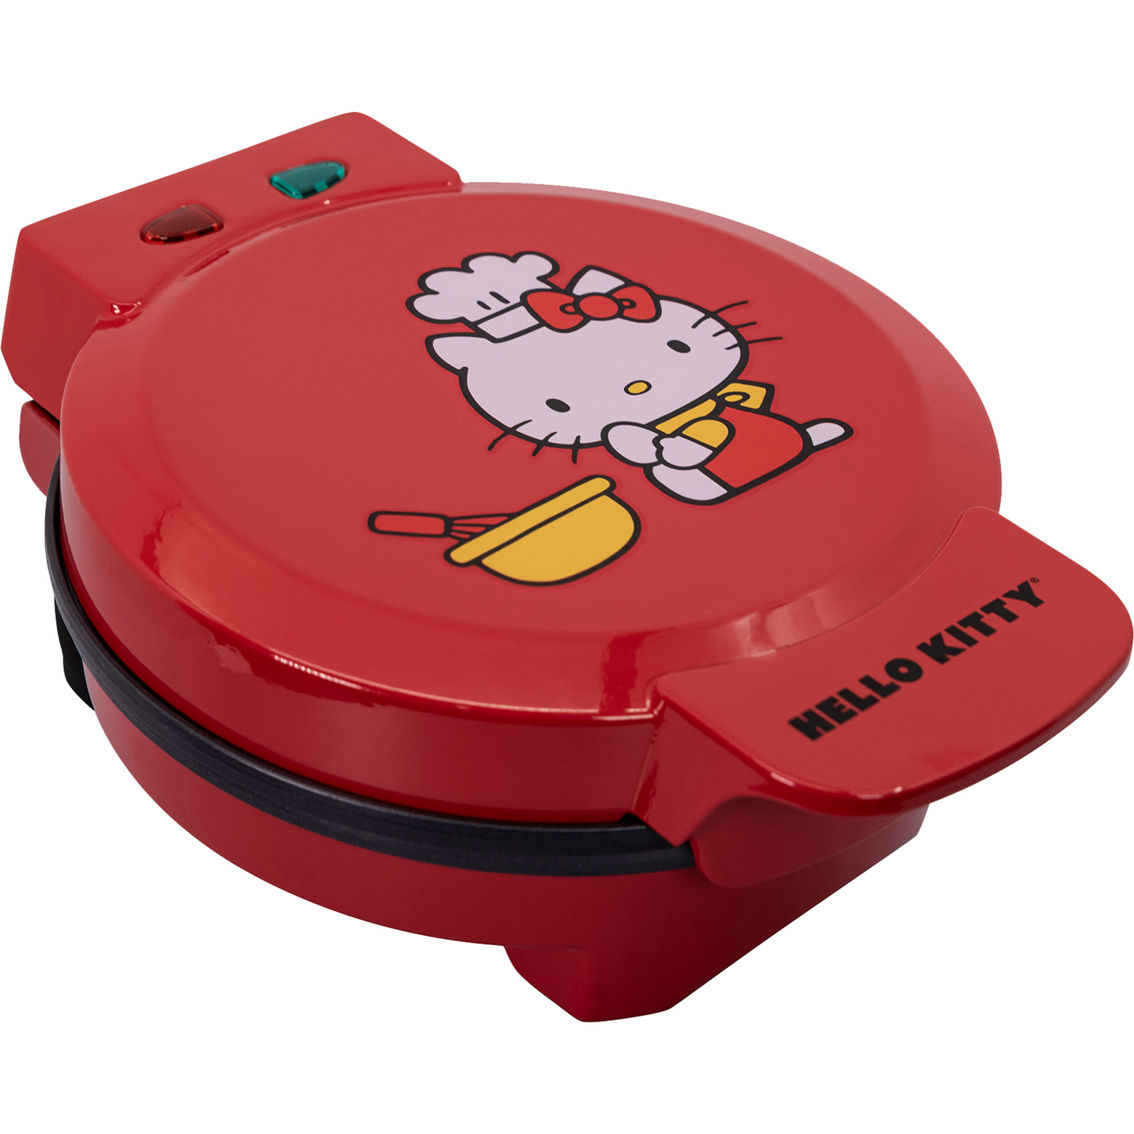 Hello Kitty Red Waffle Maker, Makes Hello Kitty Waffles - Image 2 of 9